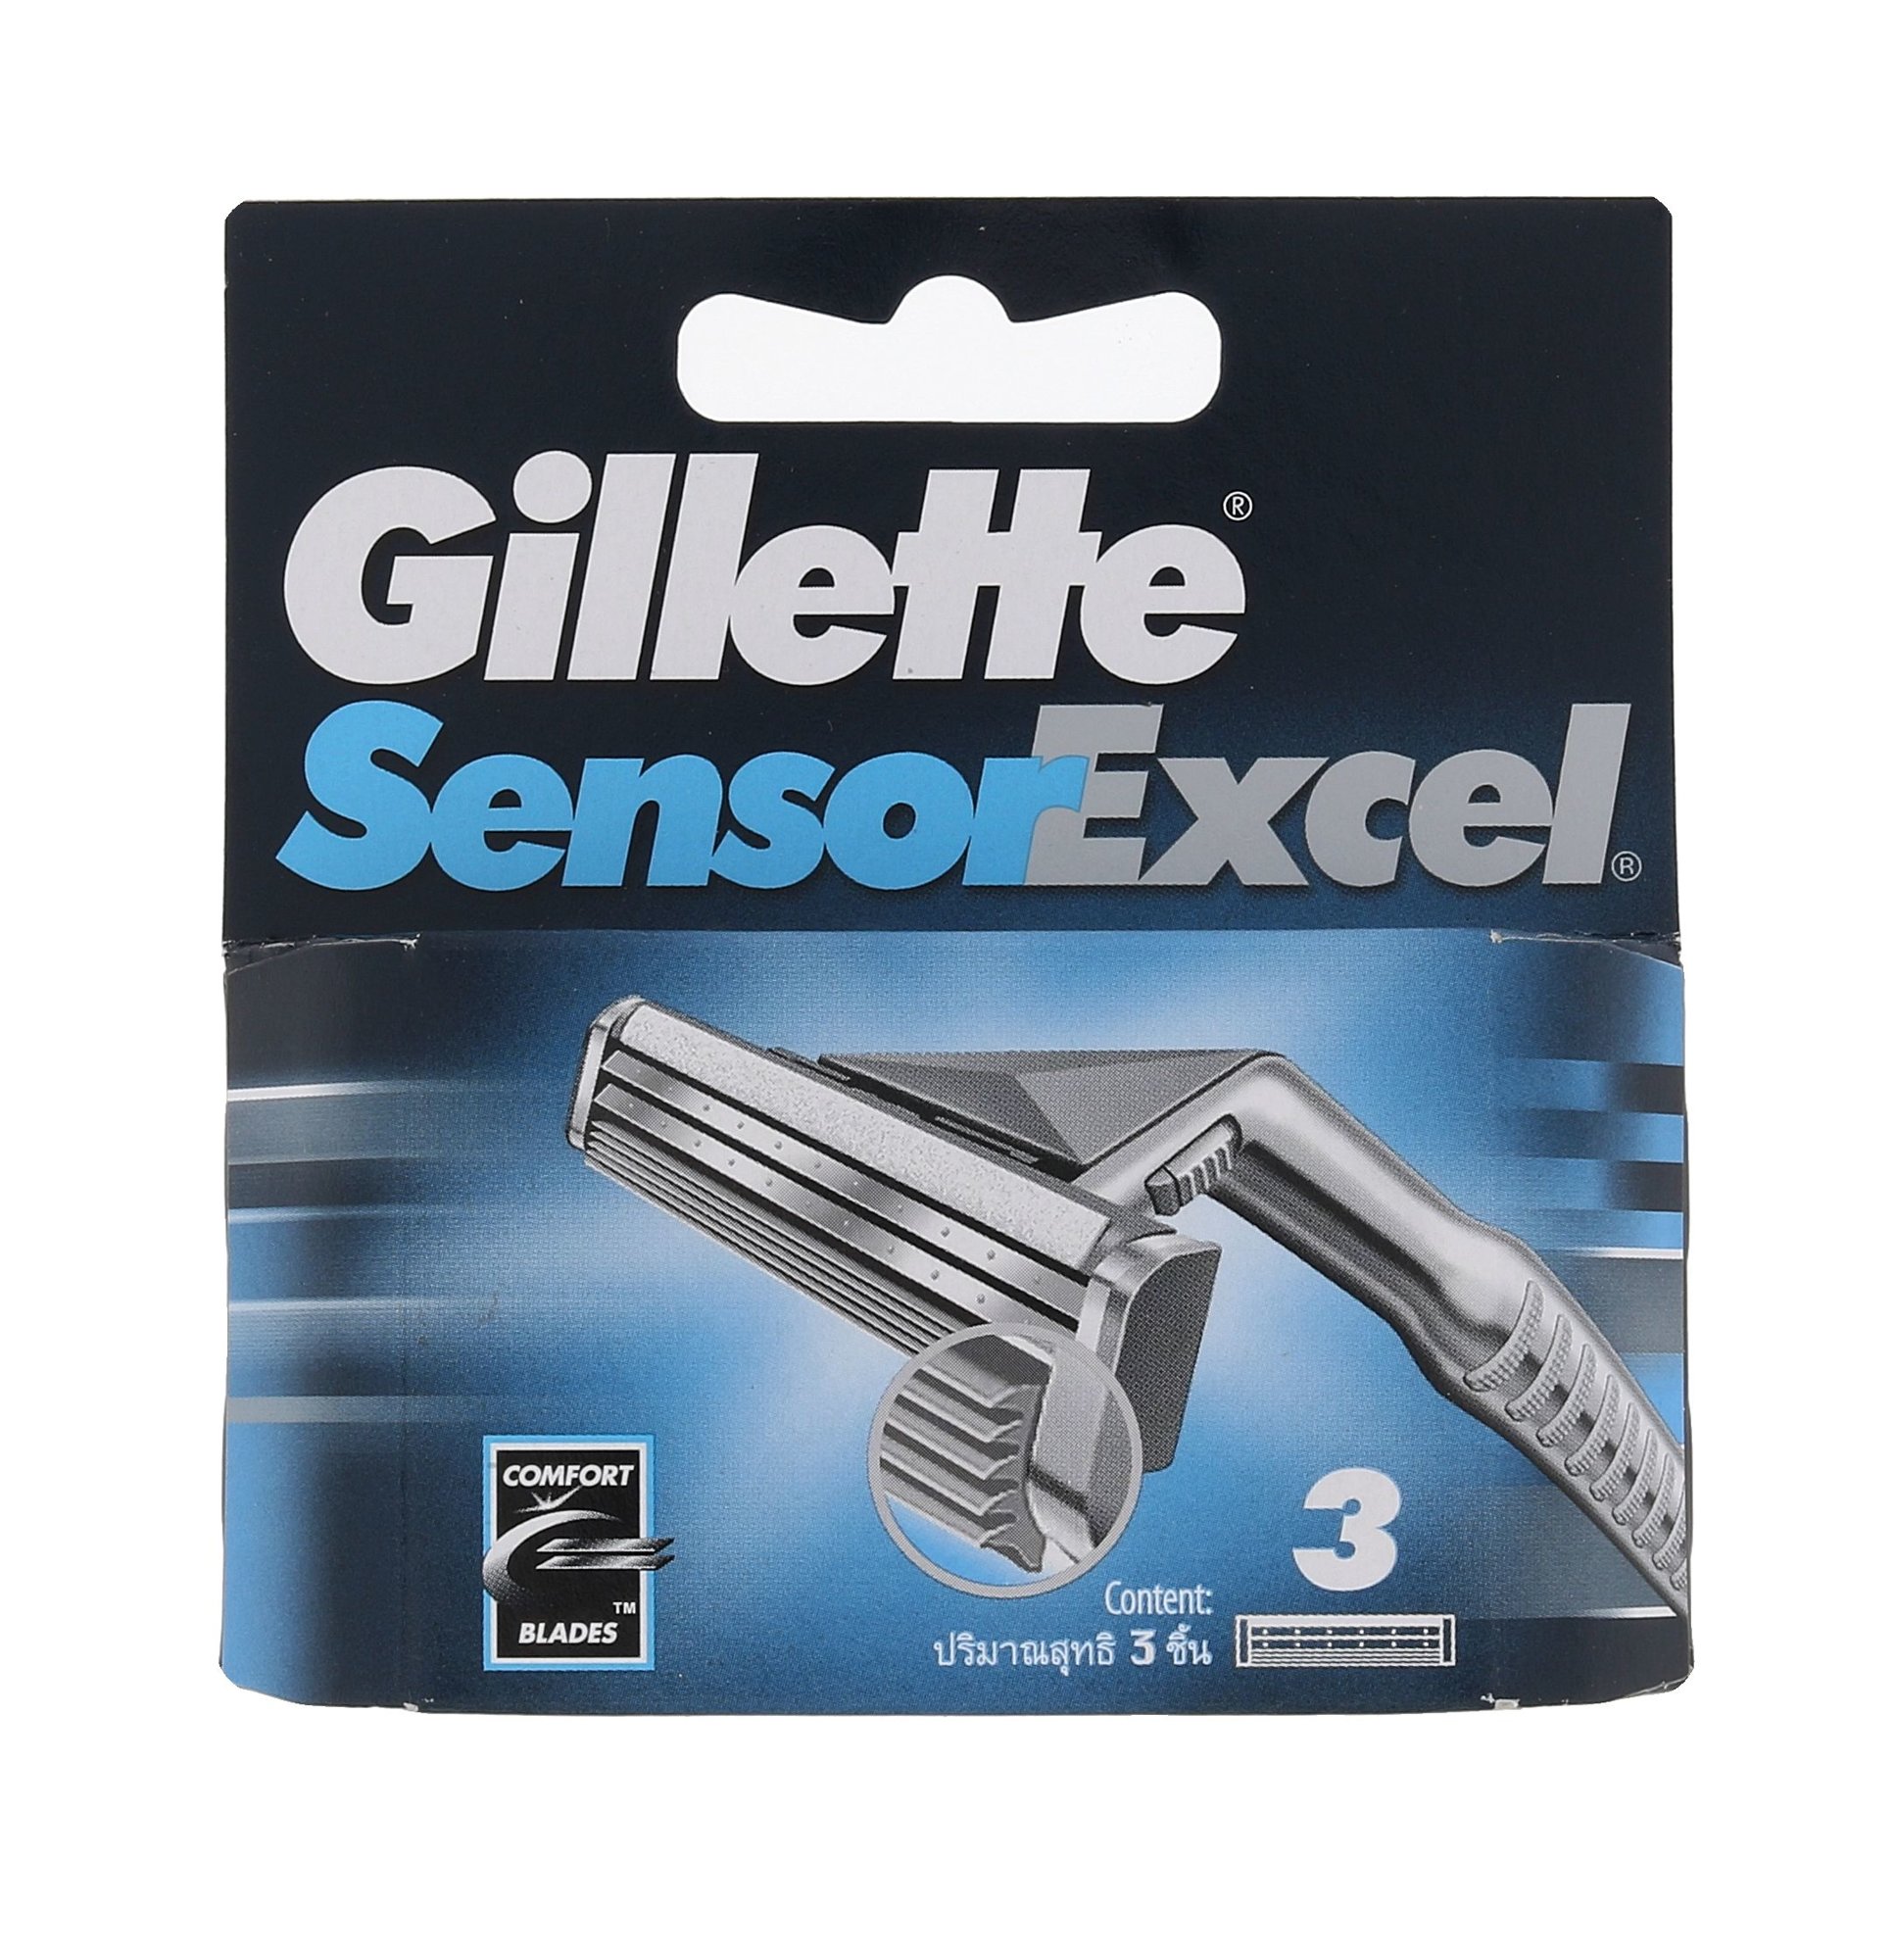 Gillette Sensor Excel skustuvo galvutė